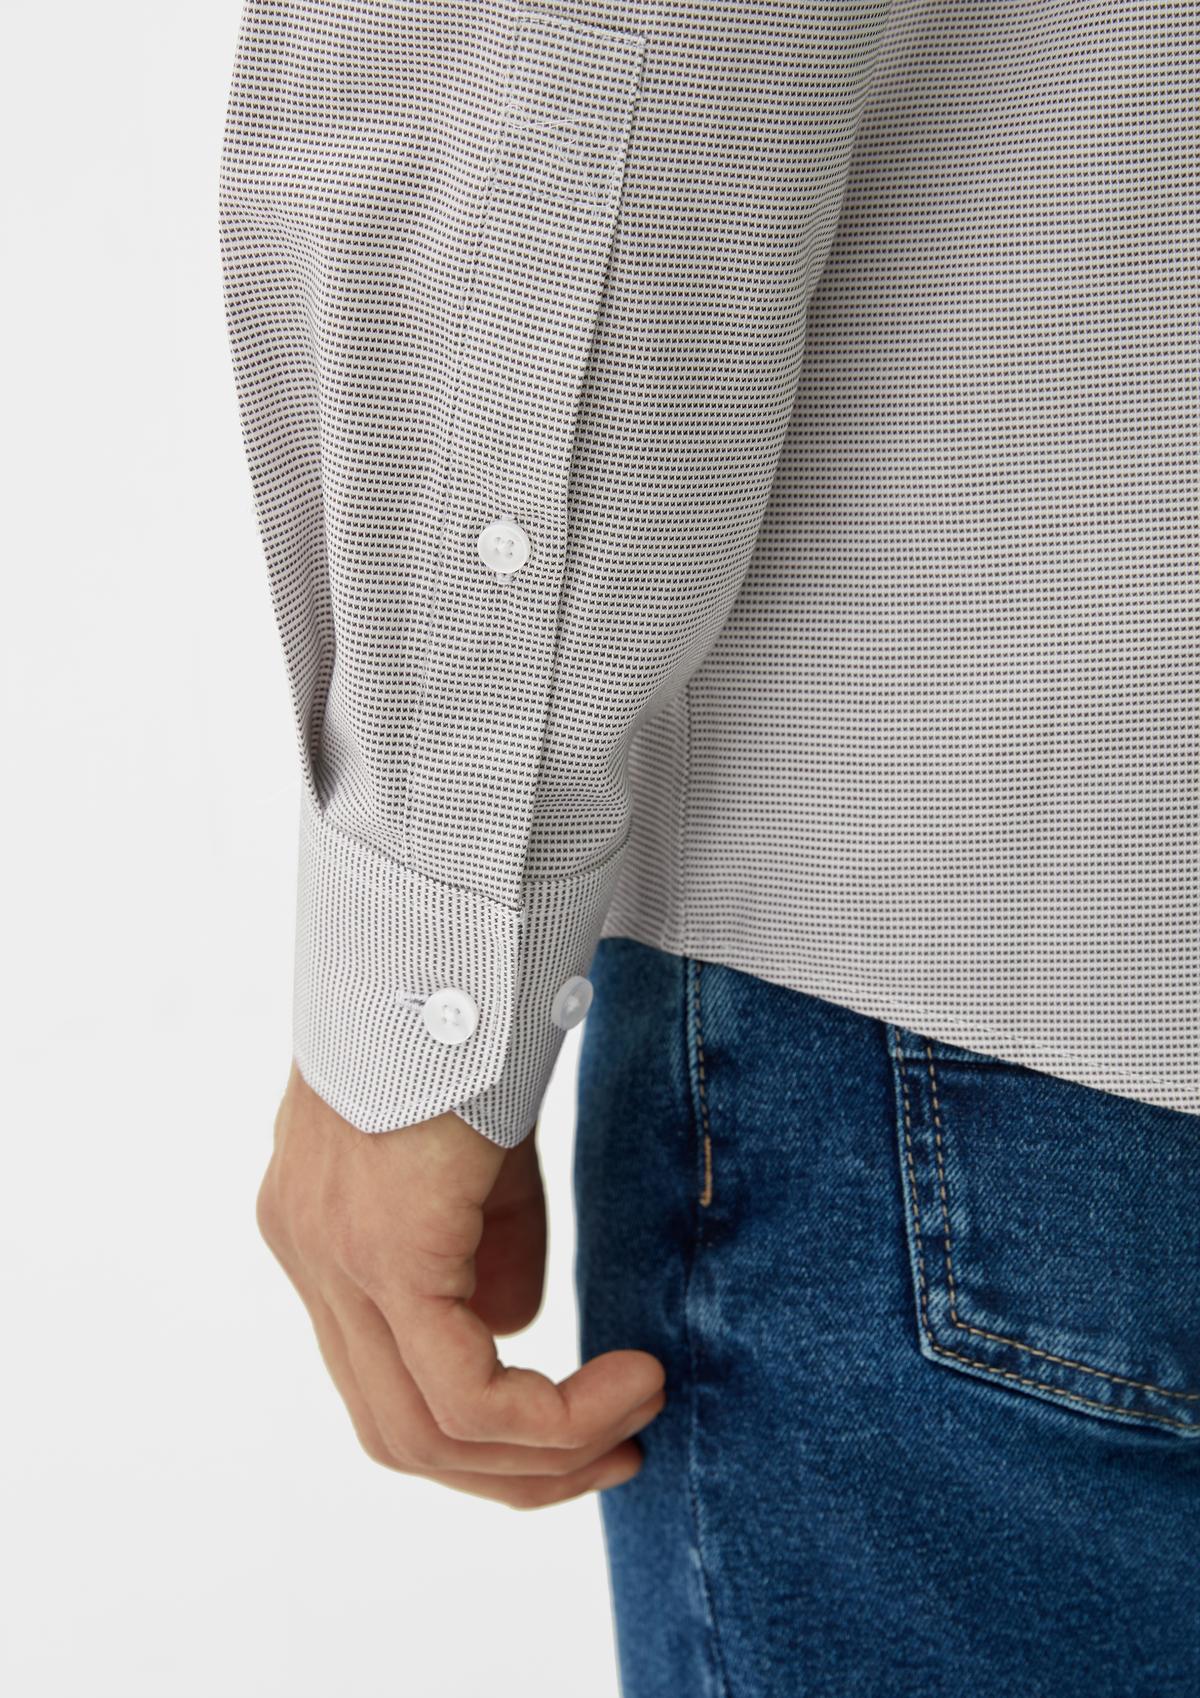 s.Oliver Slim : chemise à motif minimaliste